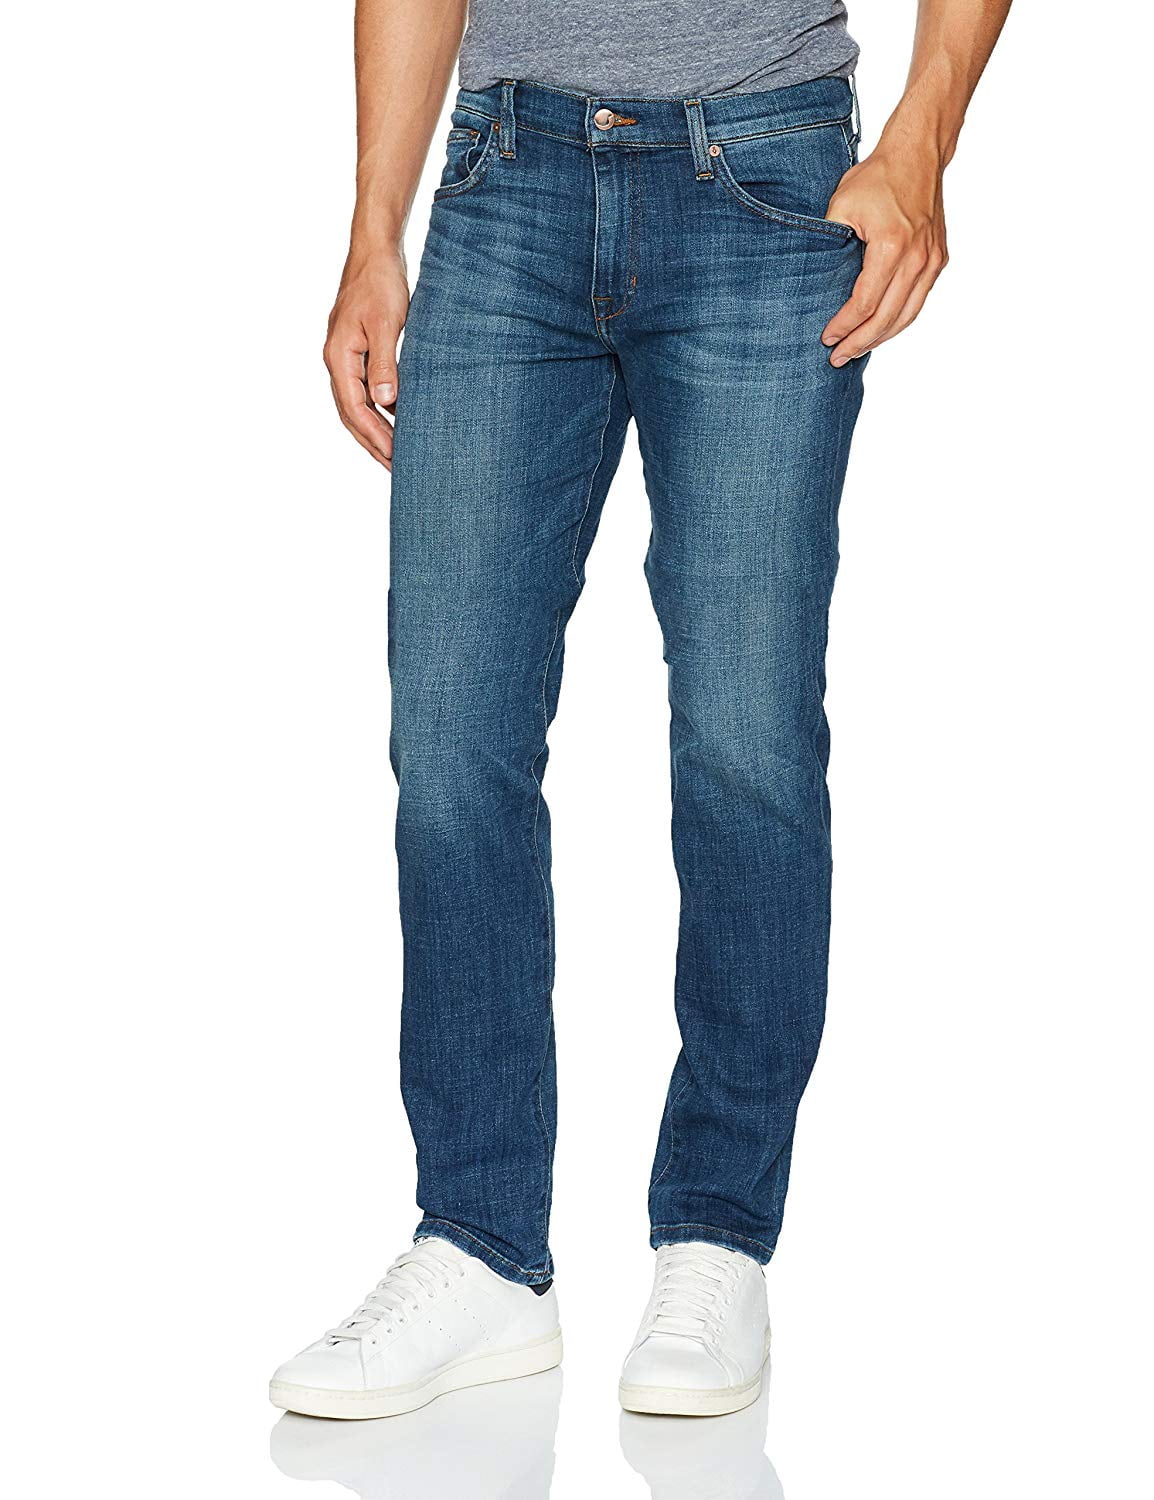 JOE'S Jeans - Mens Jeans Medium 36x36 Classic Straight Leg Stretch 36 ...